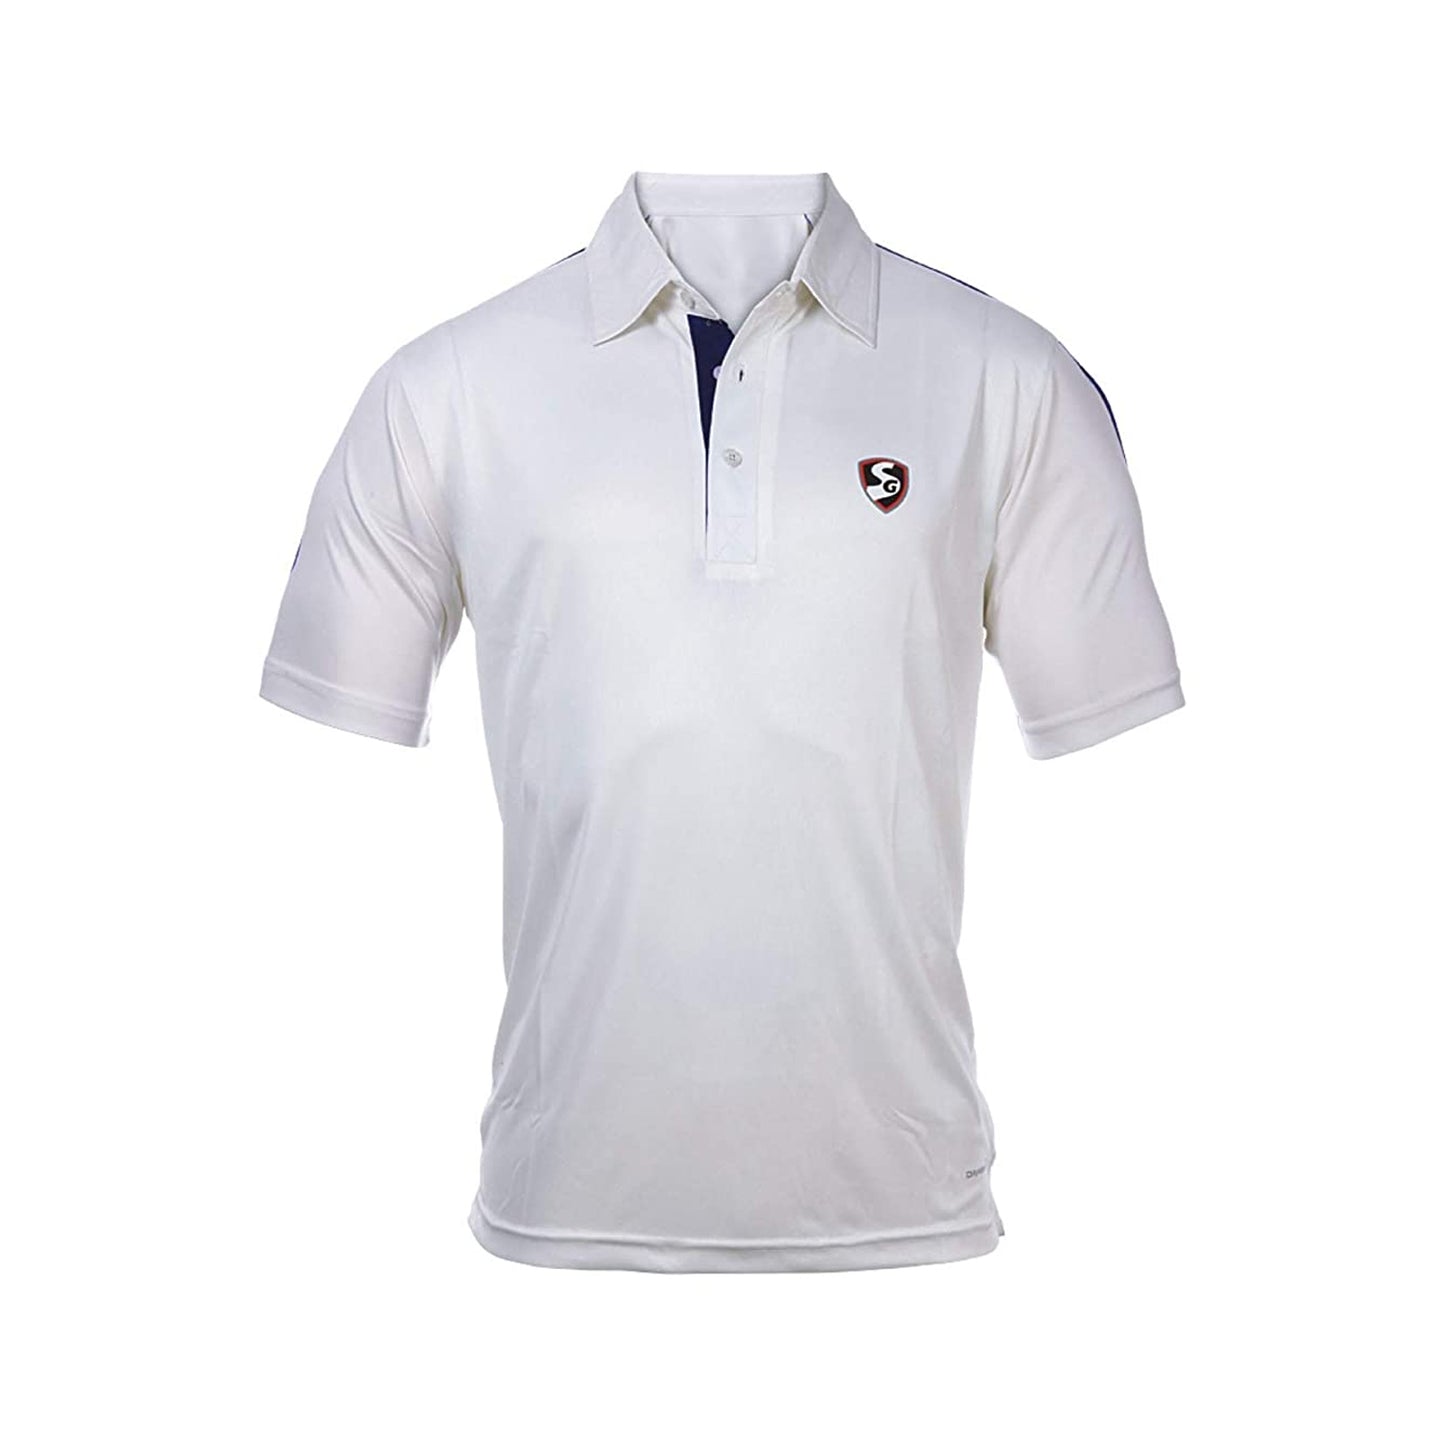 SG Century Juniors Half Sleeve Cricket Shirt, White - Best Price online Prokicksports.com